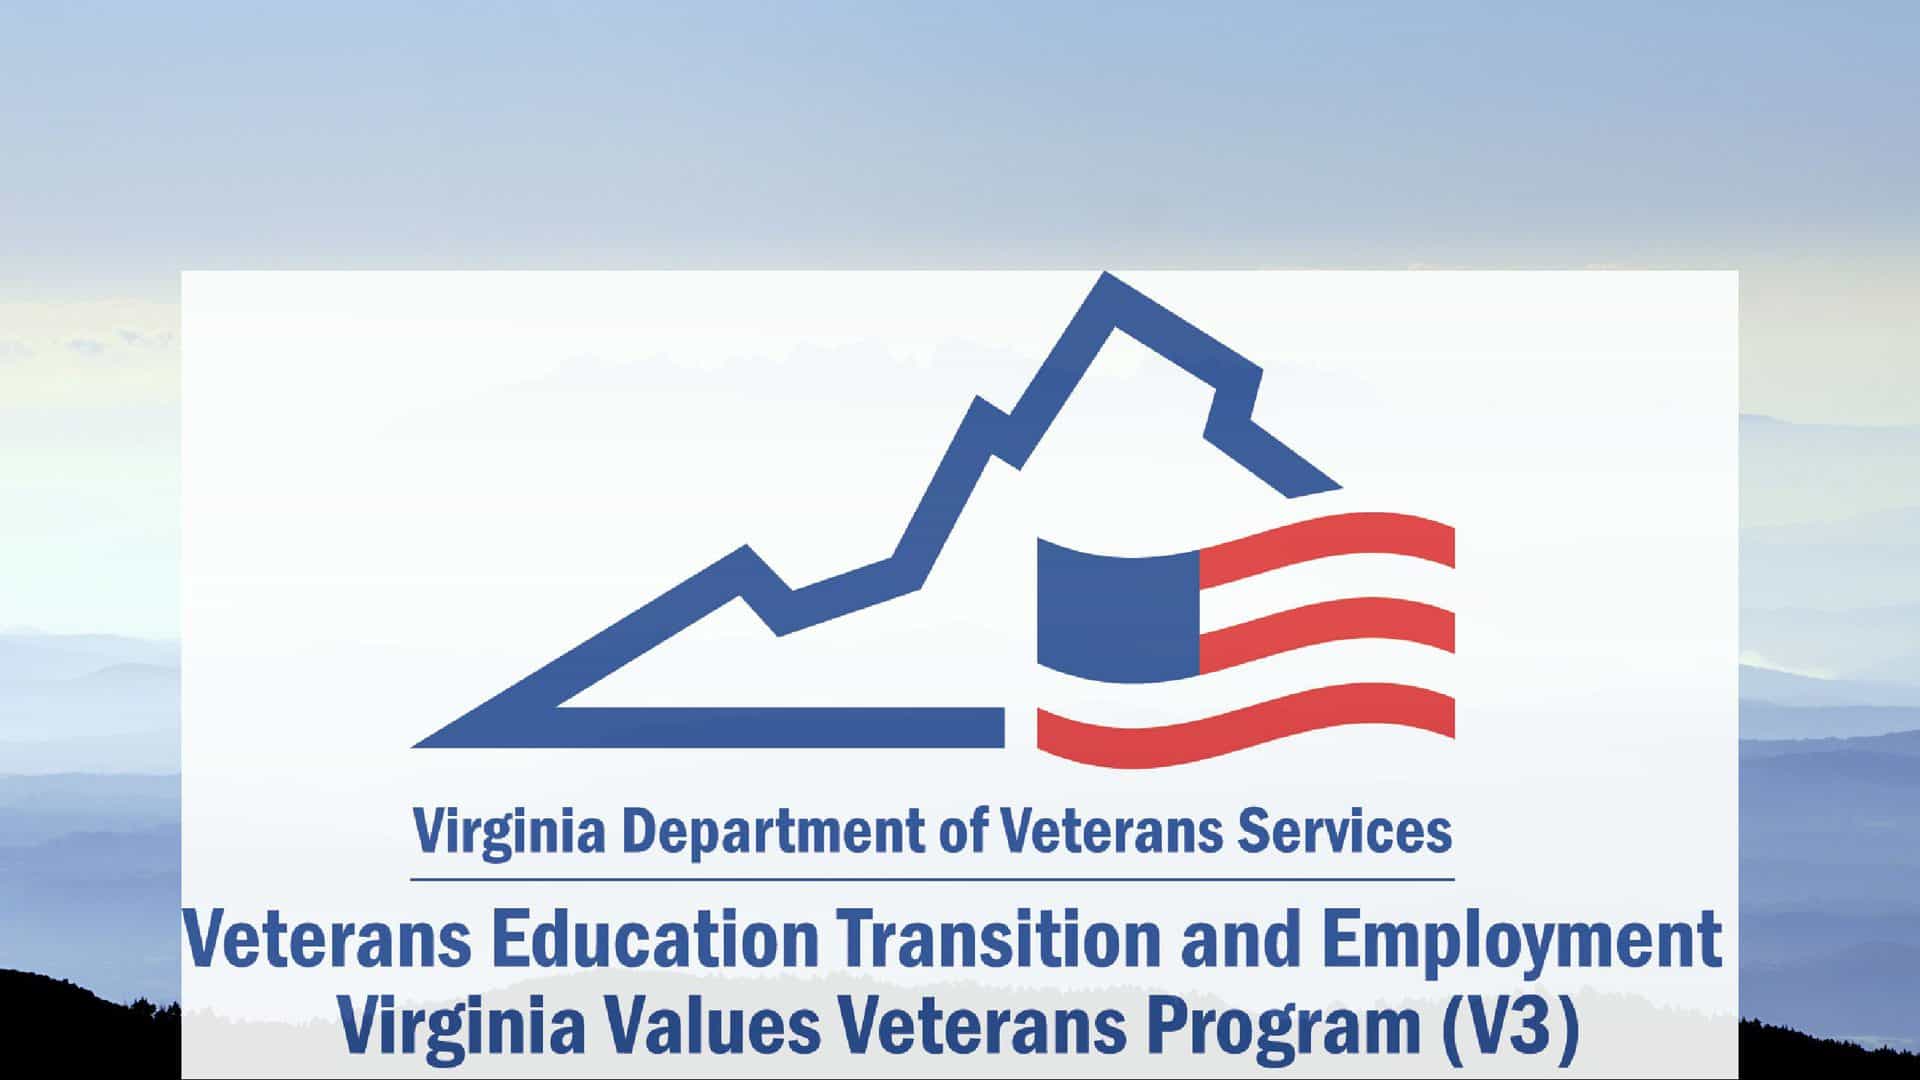 CTI Approved For The Virginia Values Veterans Program